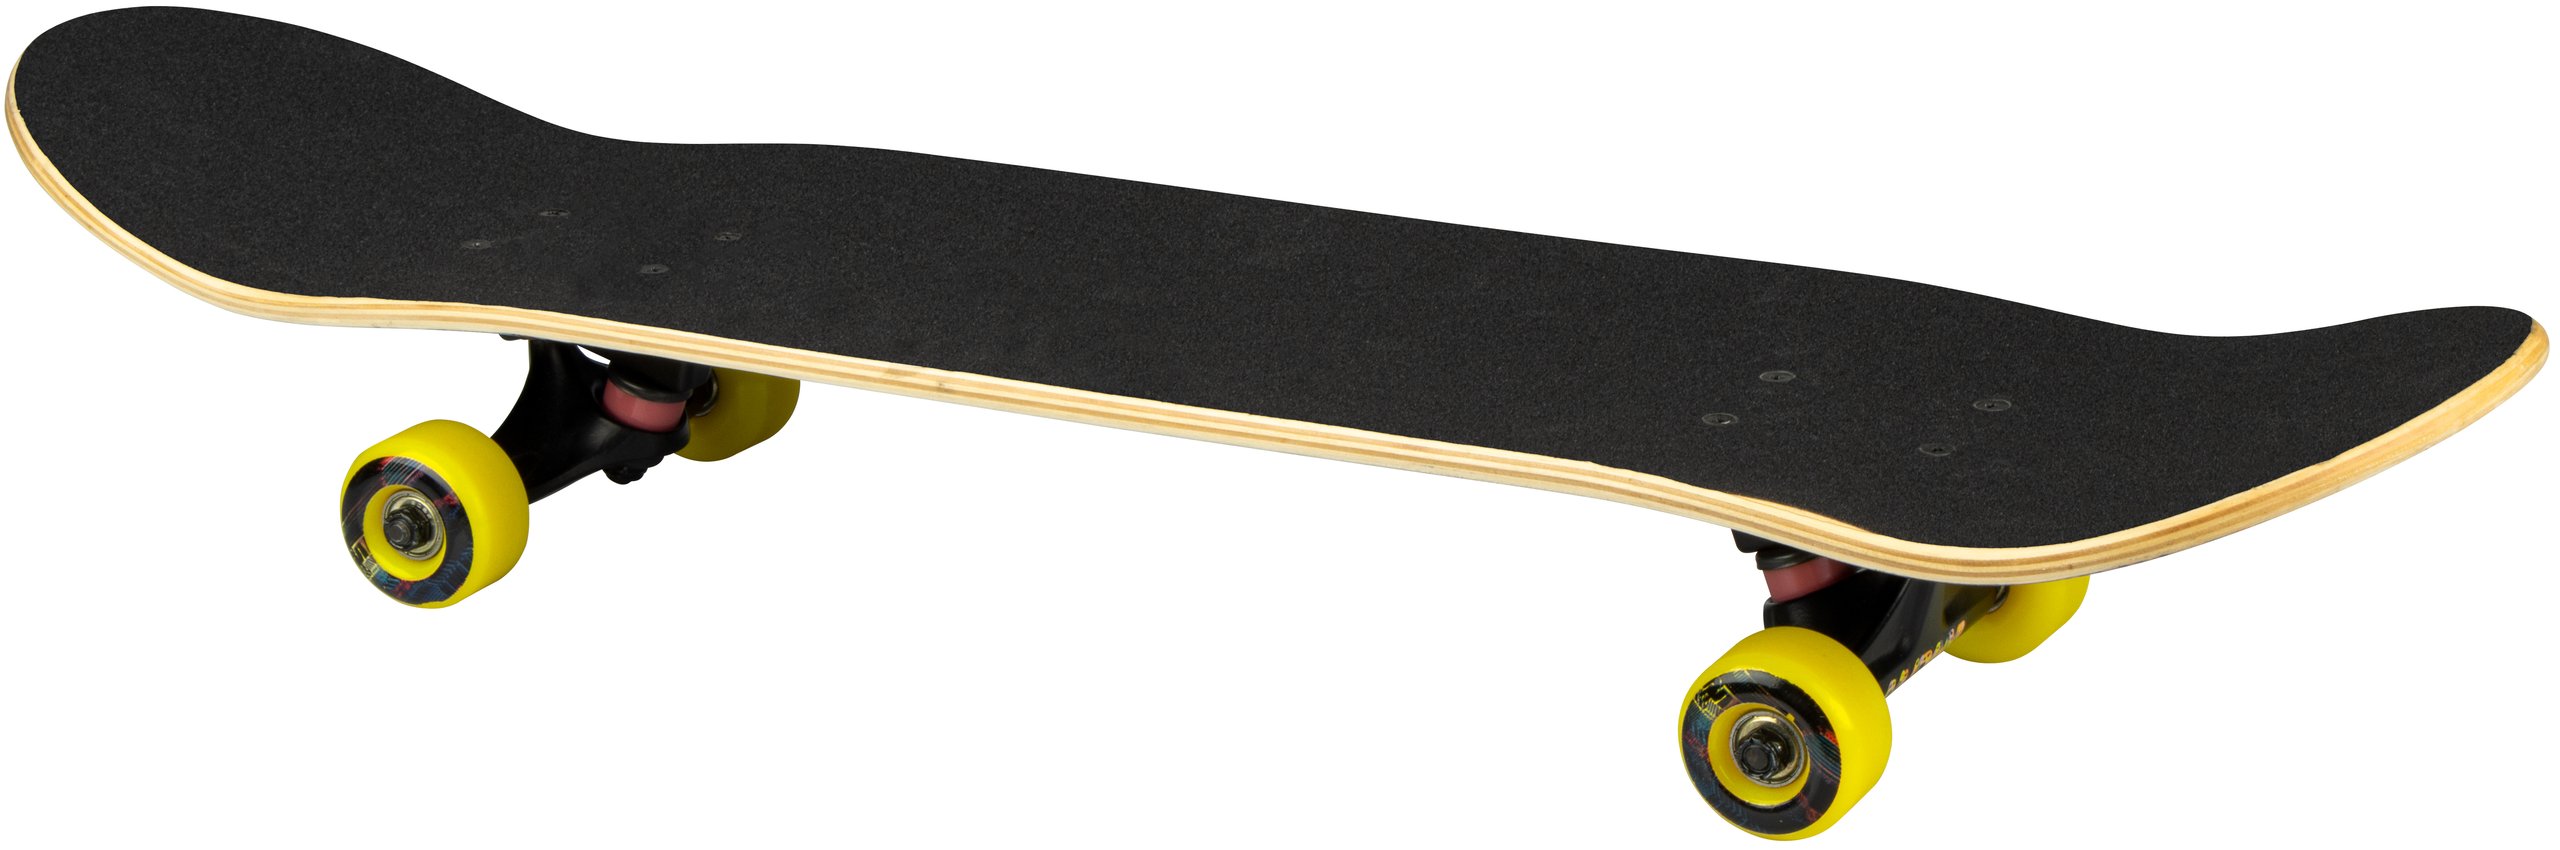 Mid-level Skateboard - Neon Chevron